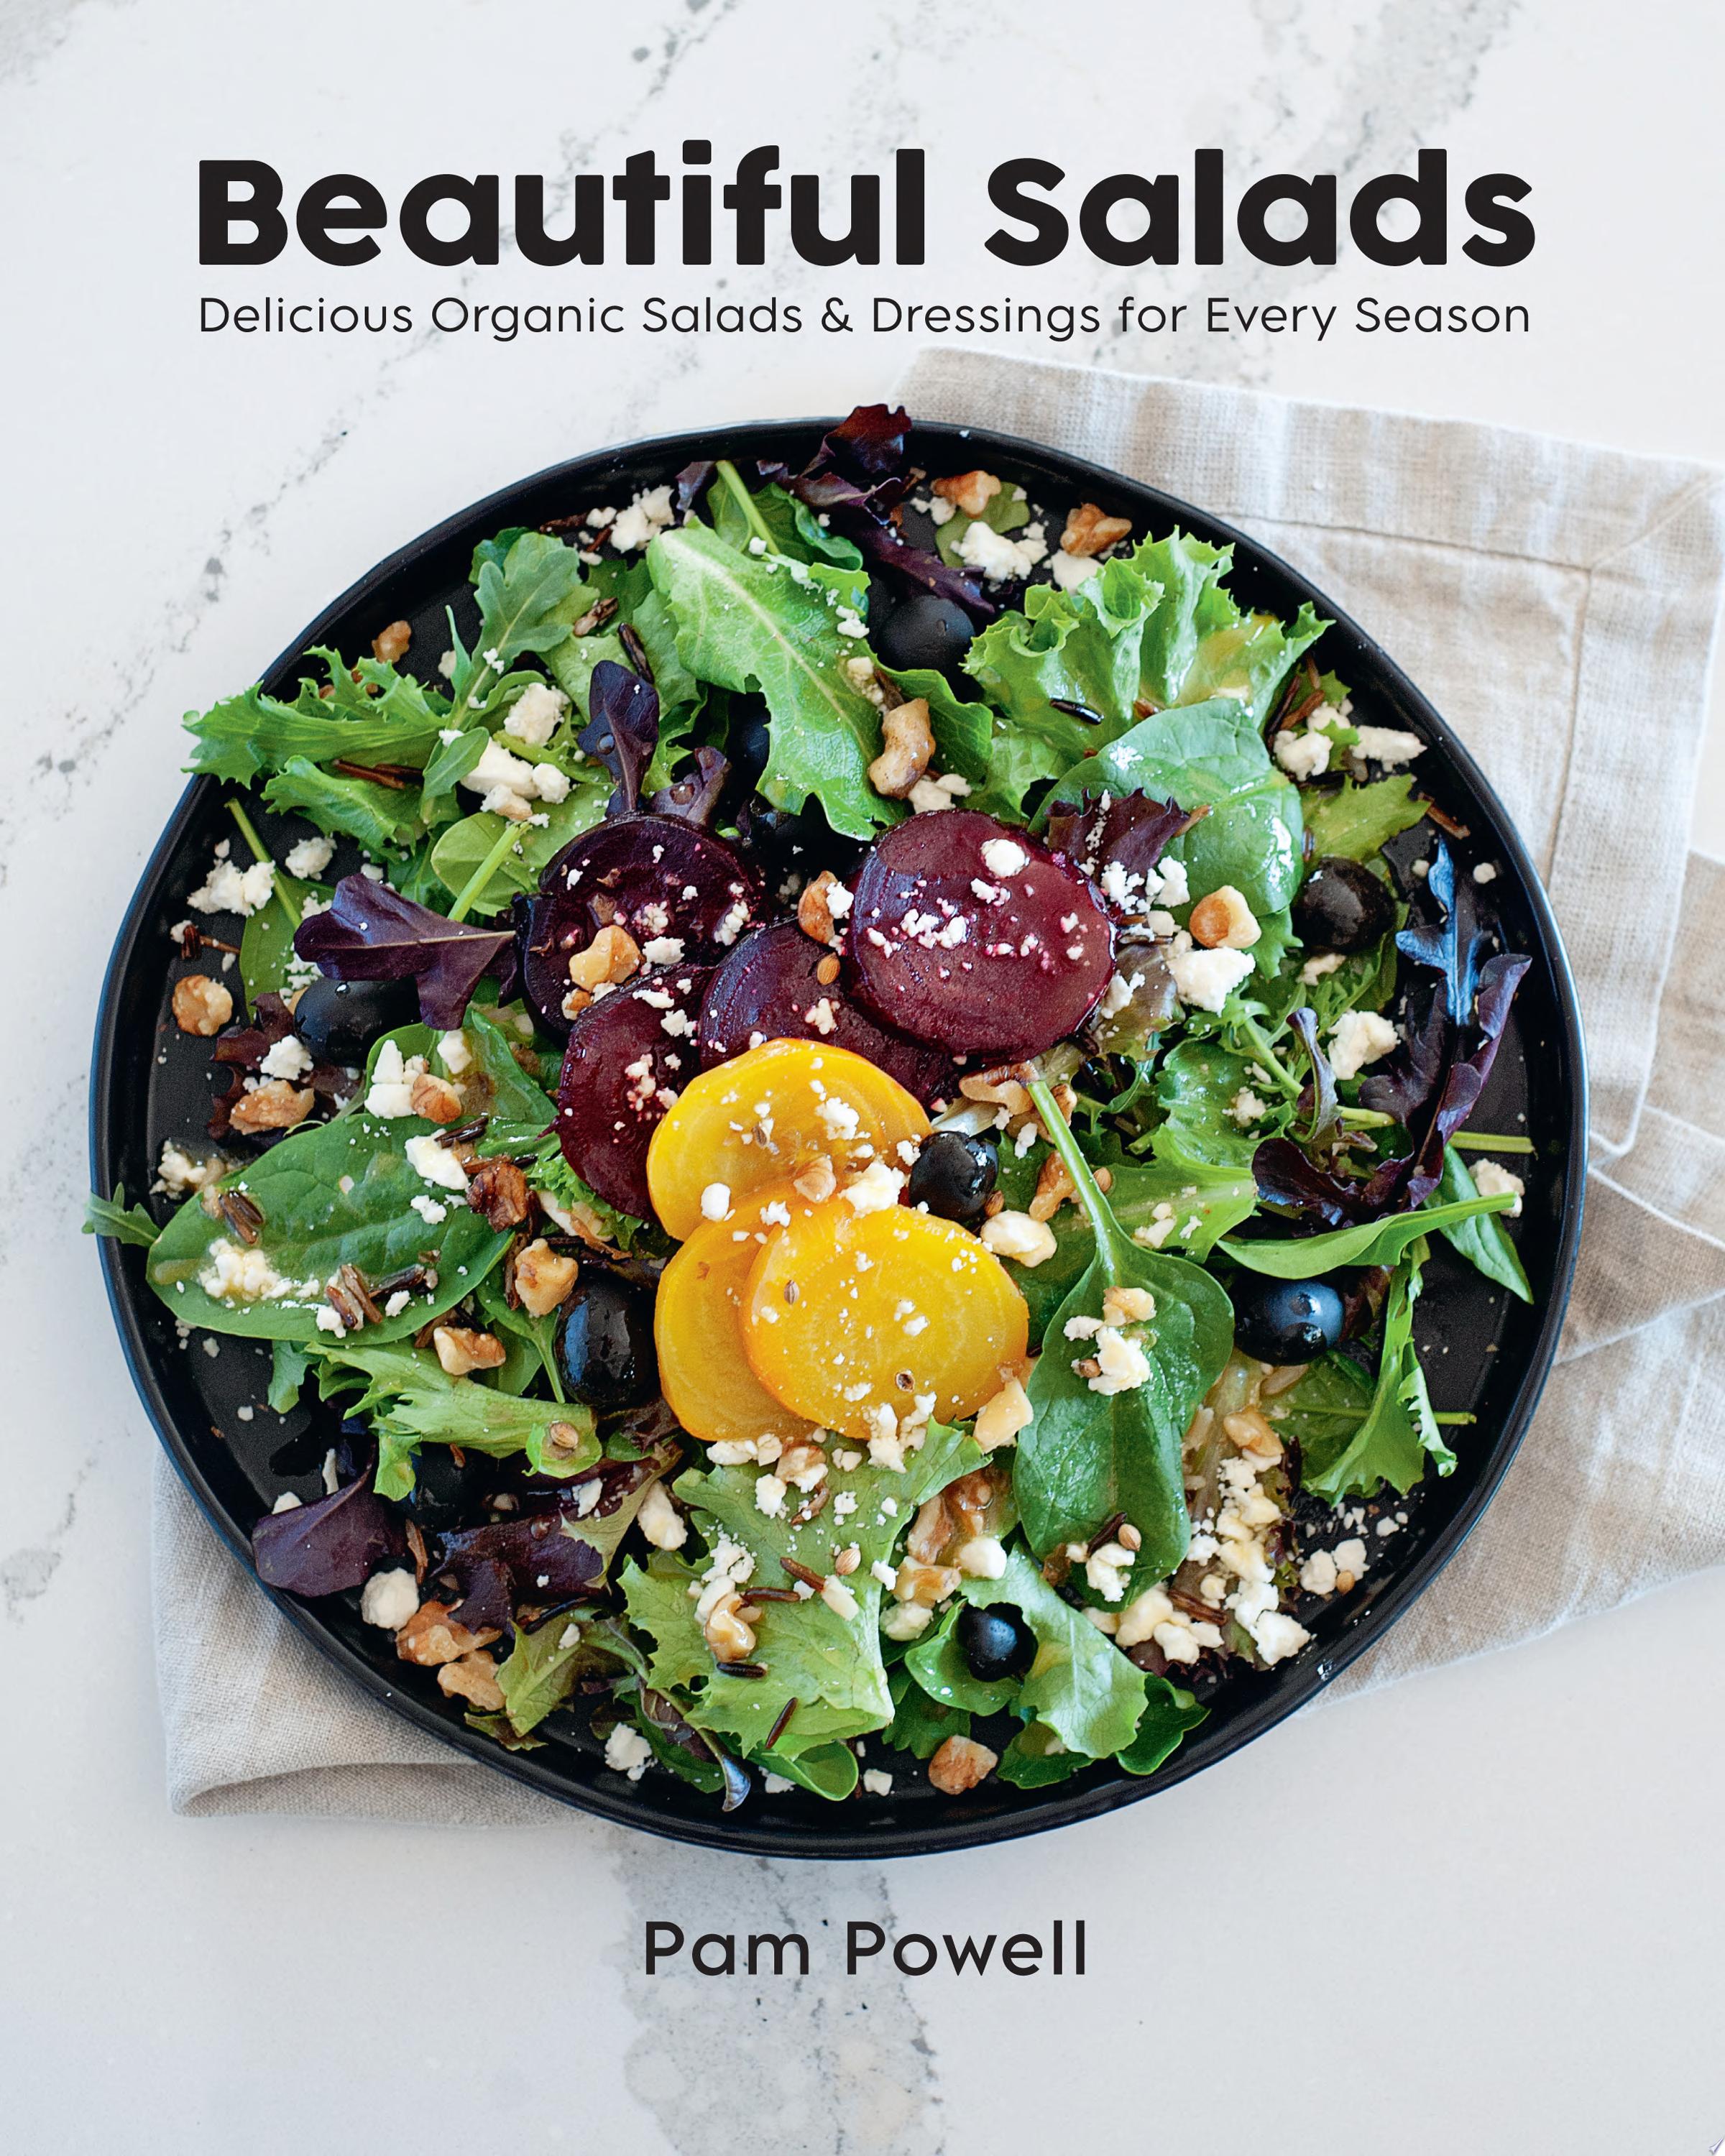 Image for "Beautiful Salads"